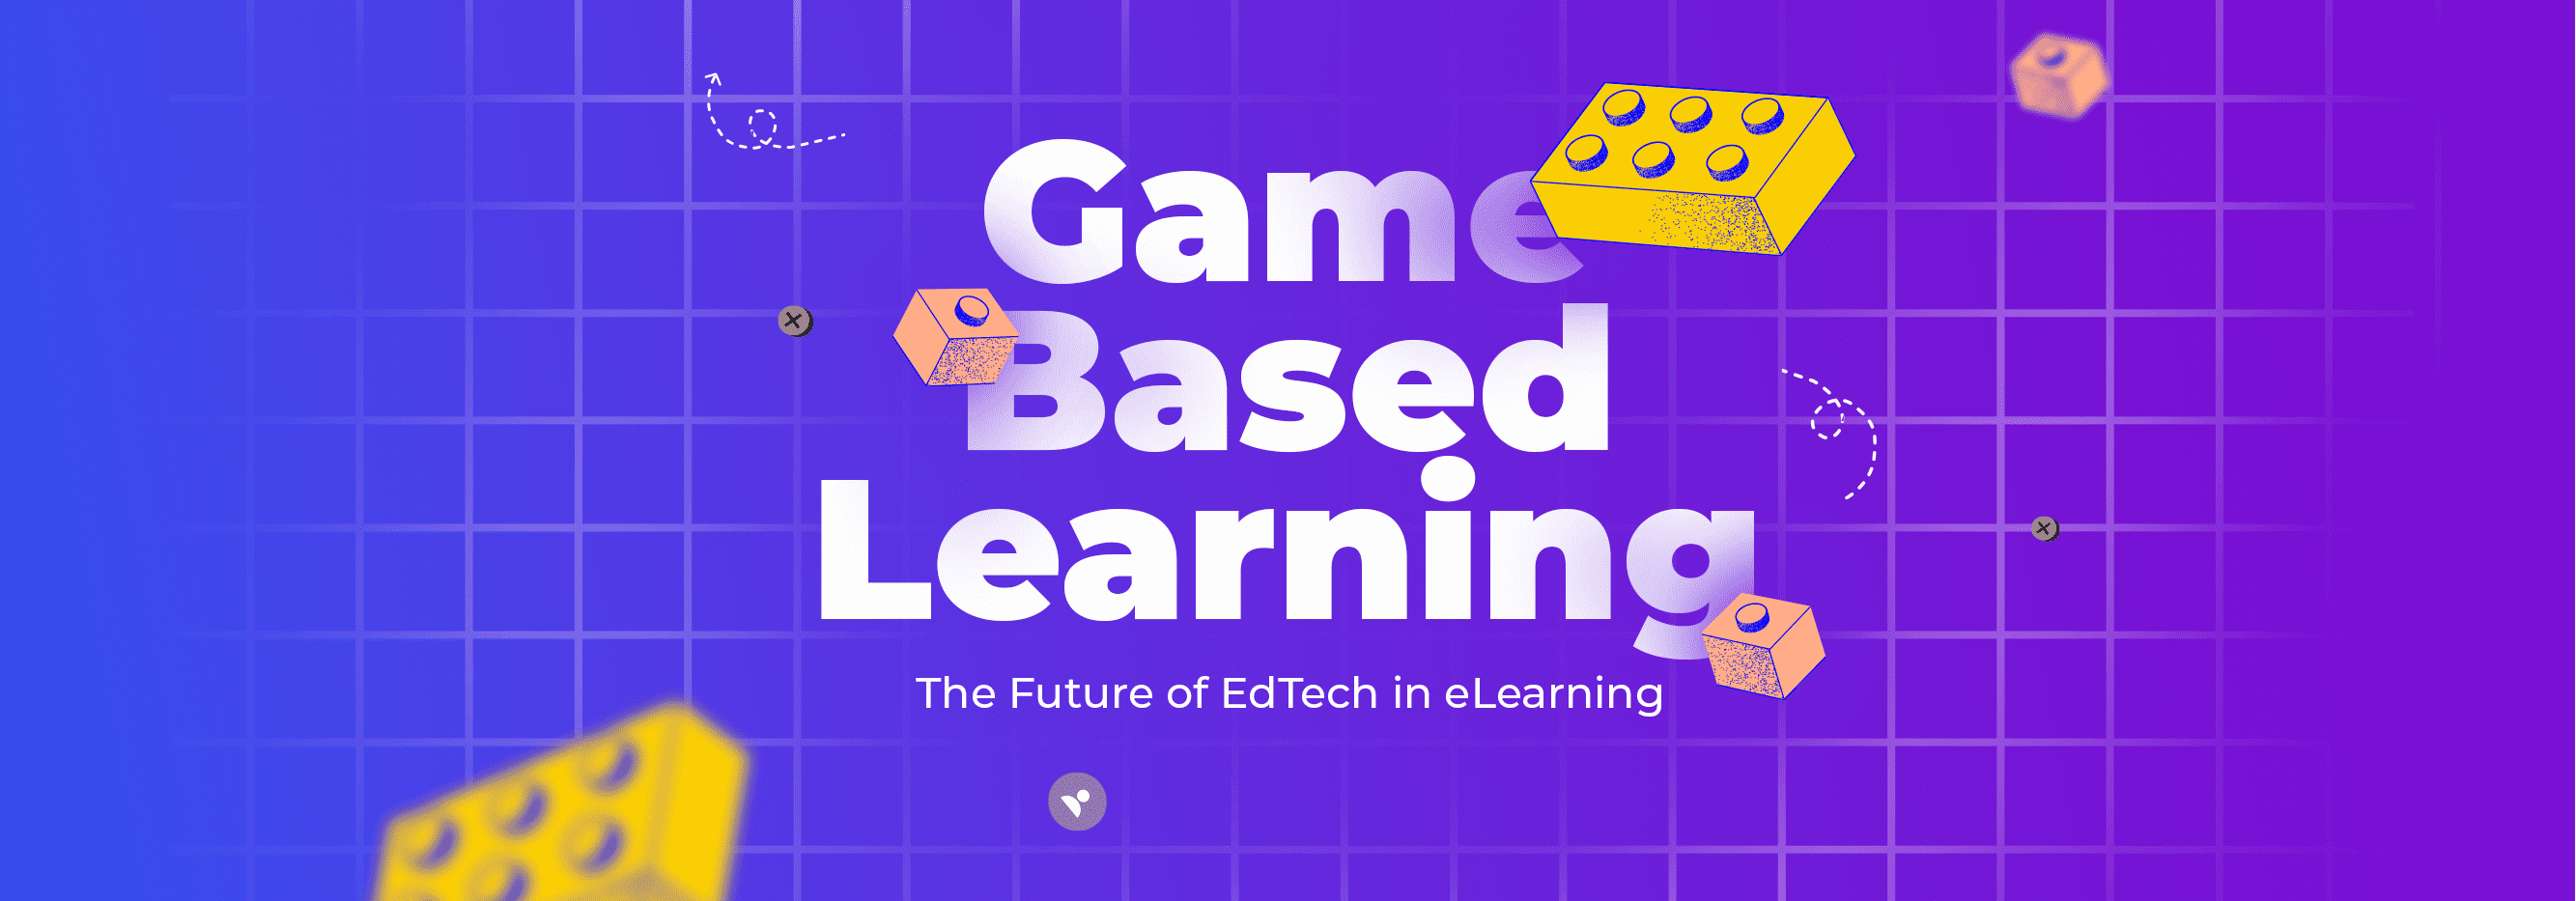 Game based learning_banner